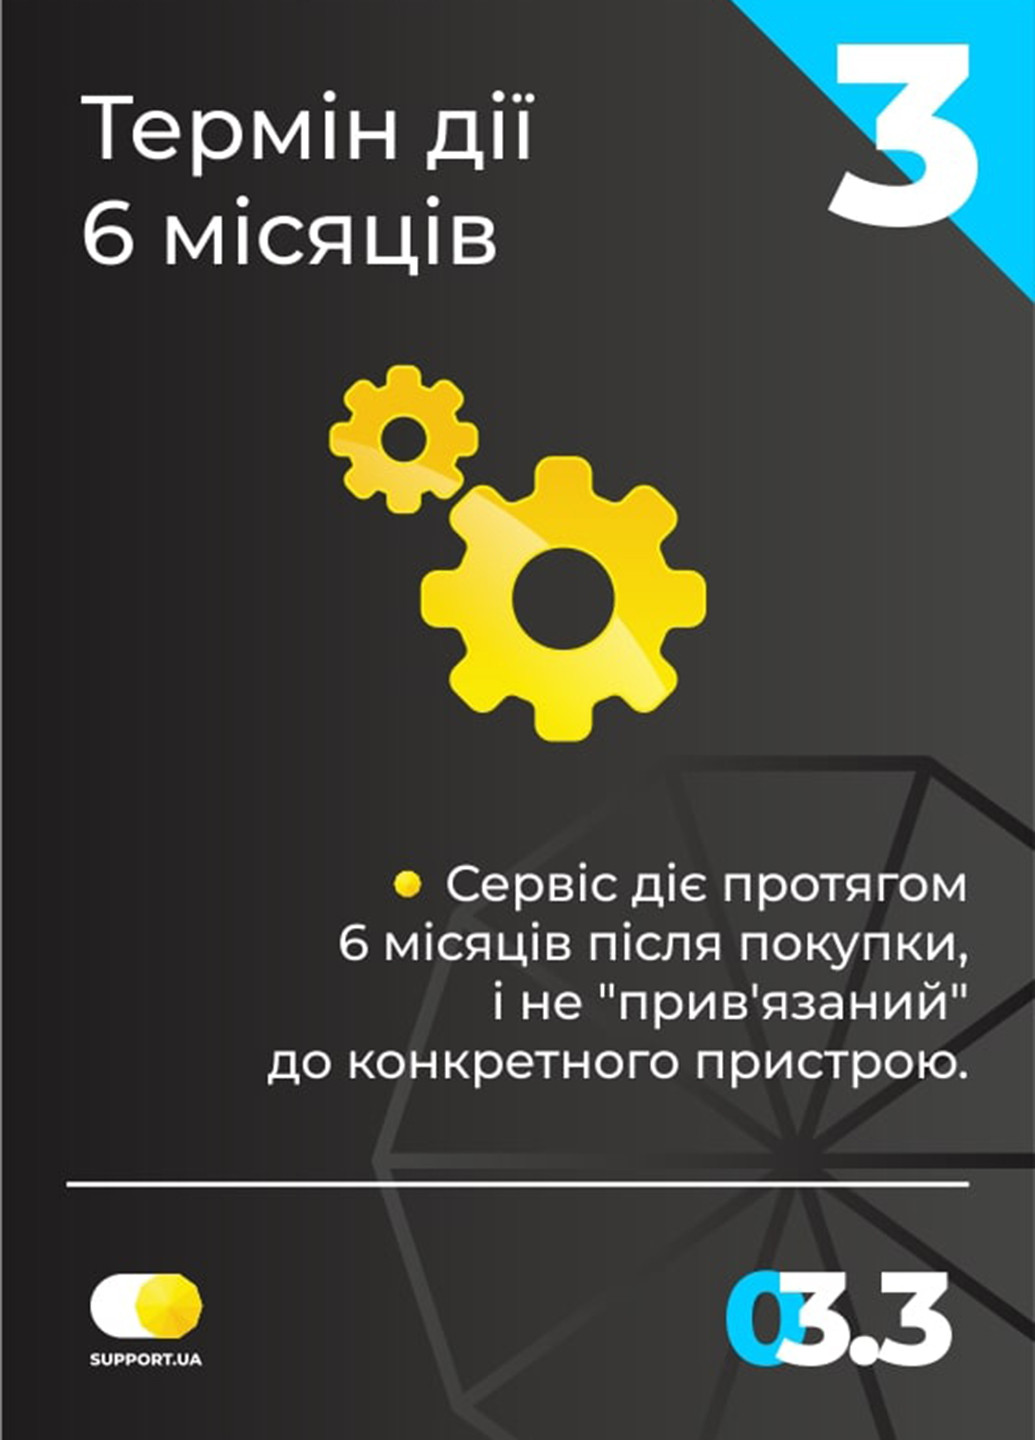 Установка Windows, Электронный сертификат от Support.ua